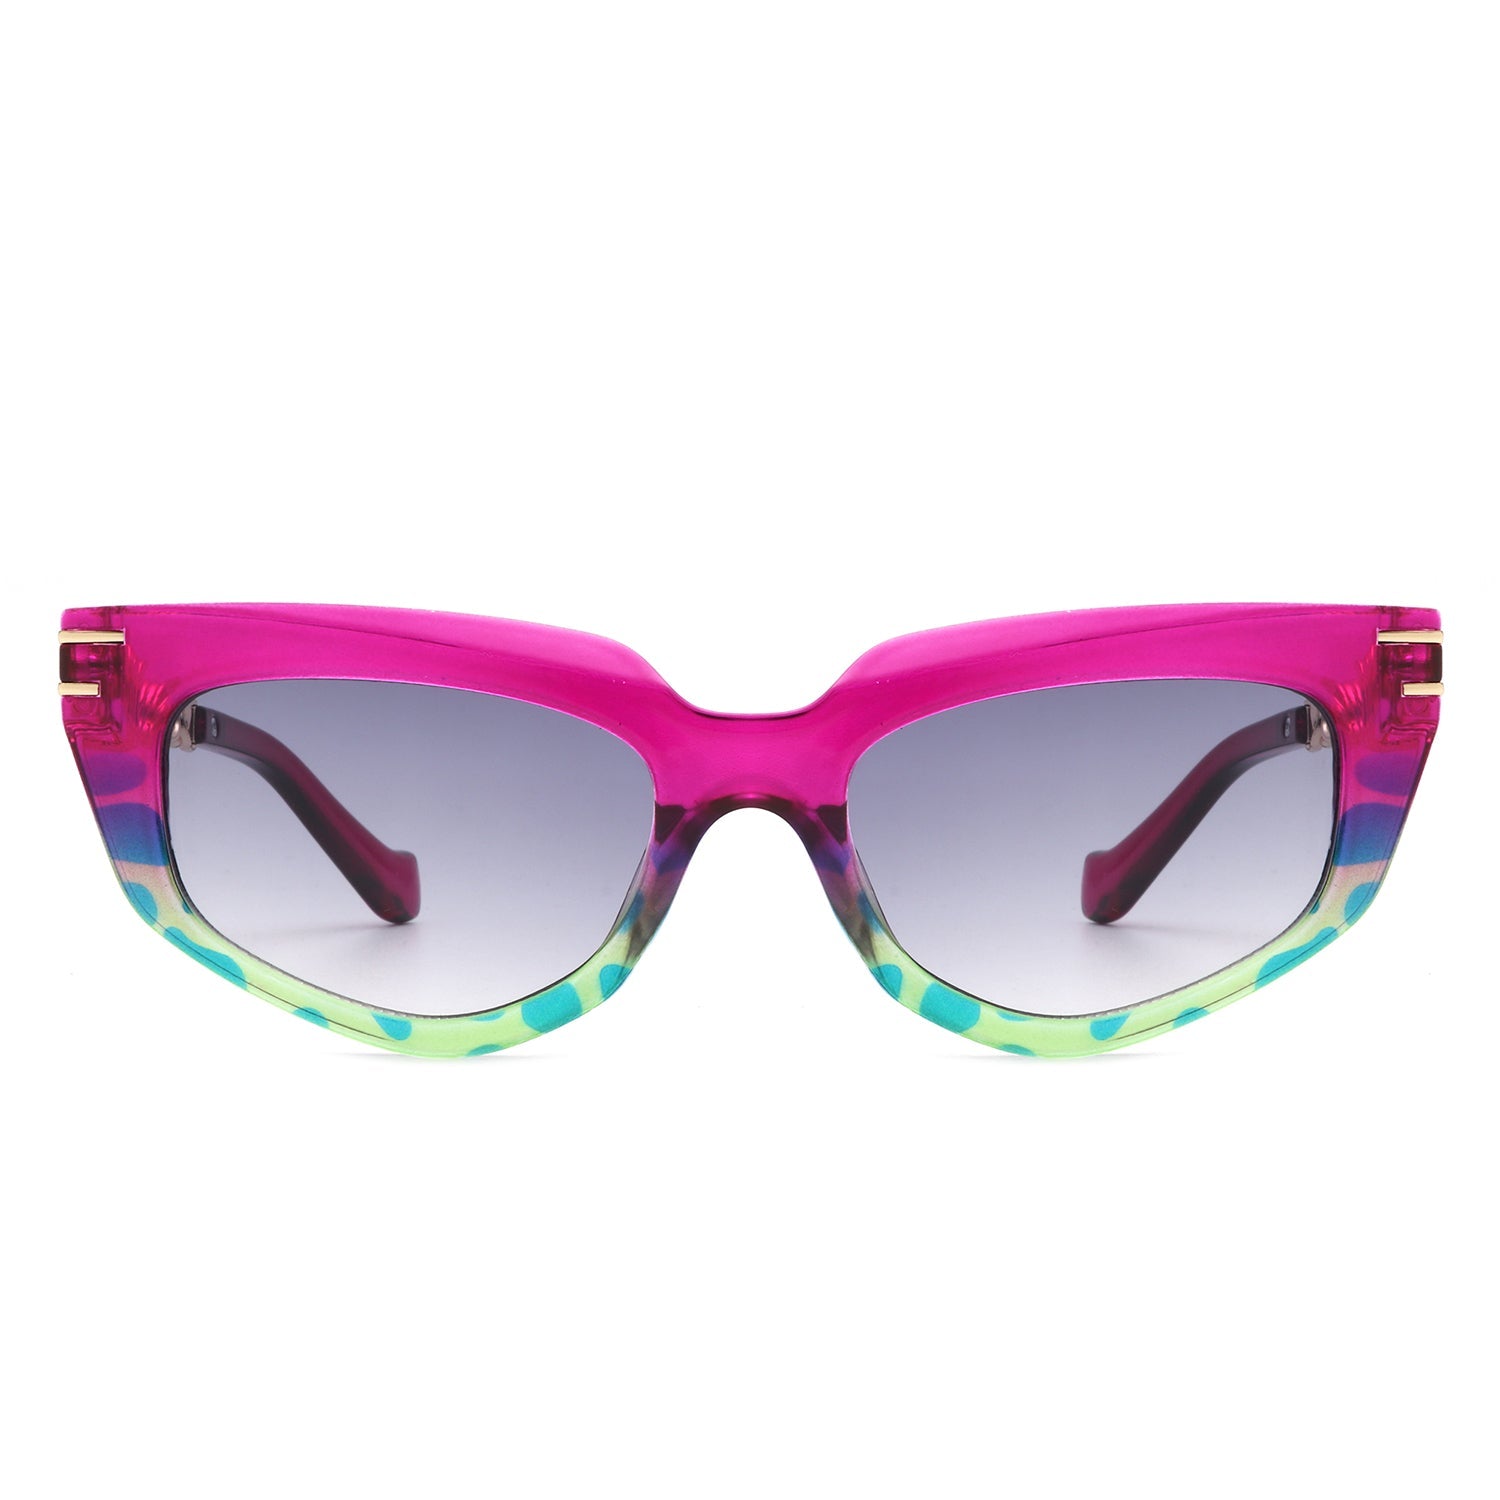 Skylight - Women Chic Chain Link Design Fashion Cat Eye Sunglasses-11